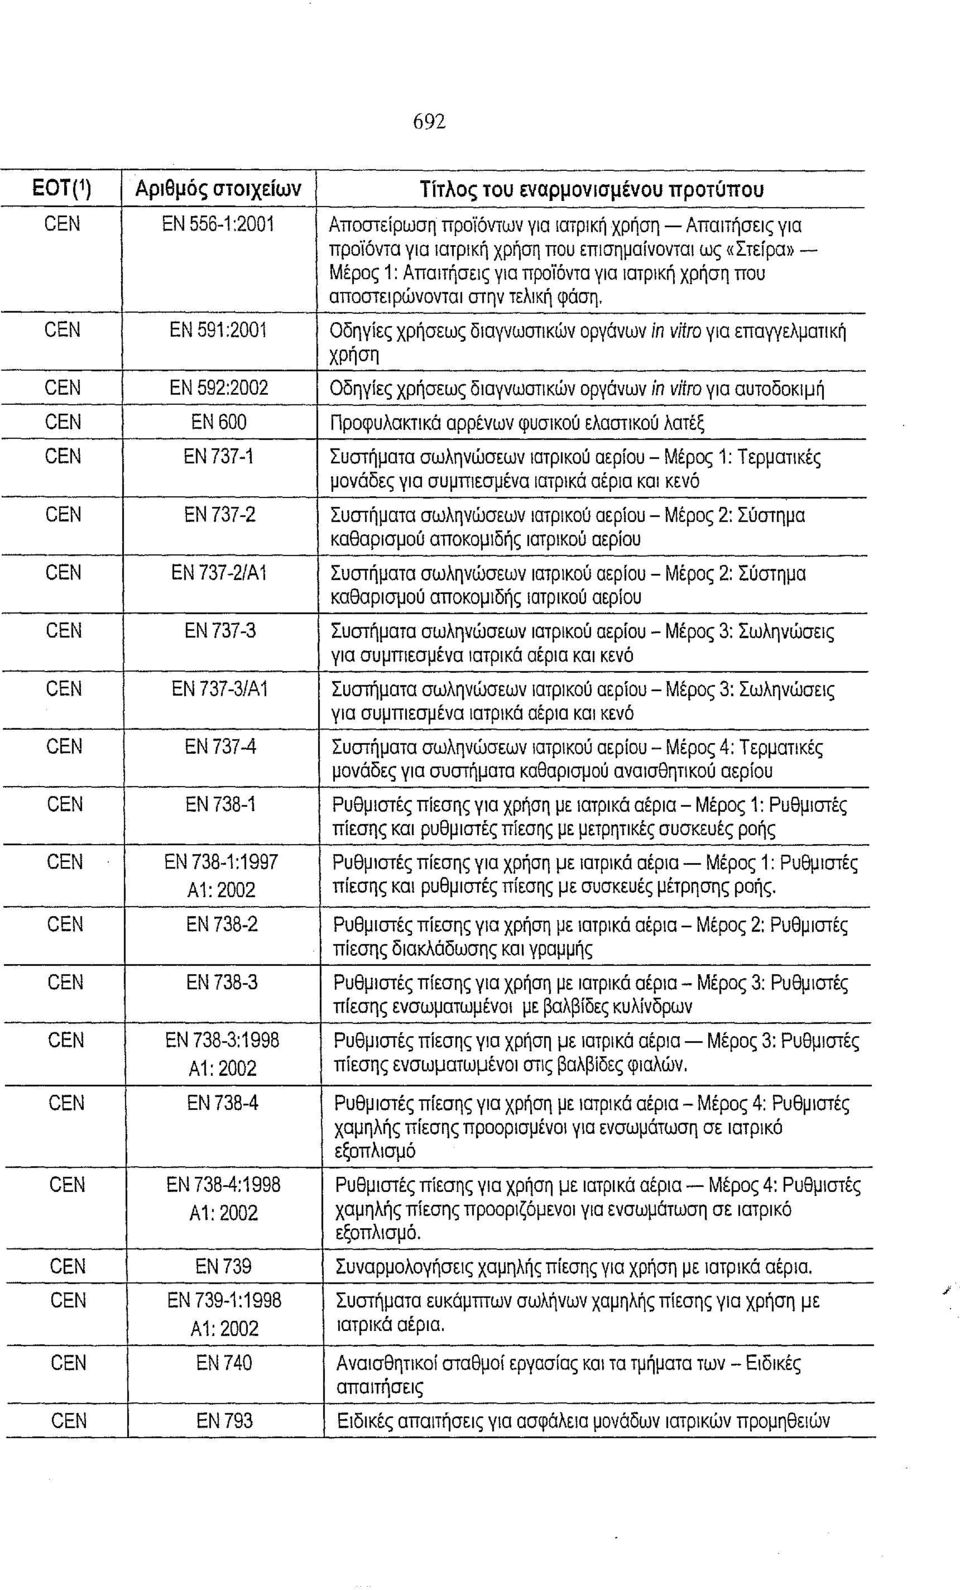 CEN ΕΝ 591:2001 Οδηγίες χρήσεως διαγνωστικών οργάνων in vitro για επαγγελματική χρήση CEN ΕΝ 592:2002 Οδηγίες χρήσεως διαγνωστικών οργάνων in vitro για αυτοδοκιμή CEN ΕΝ 600 Προφυλακτικά αρρένων